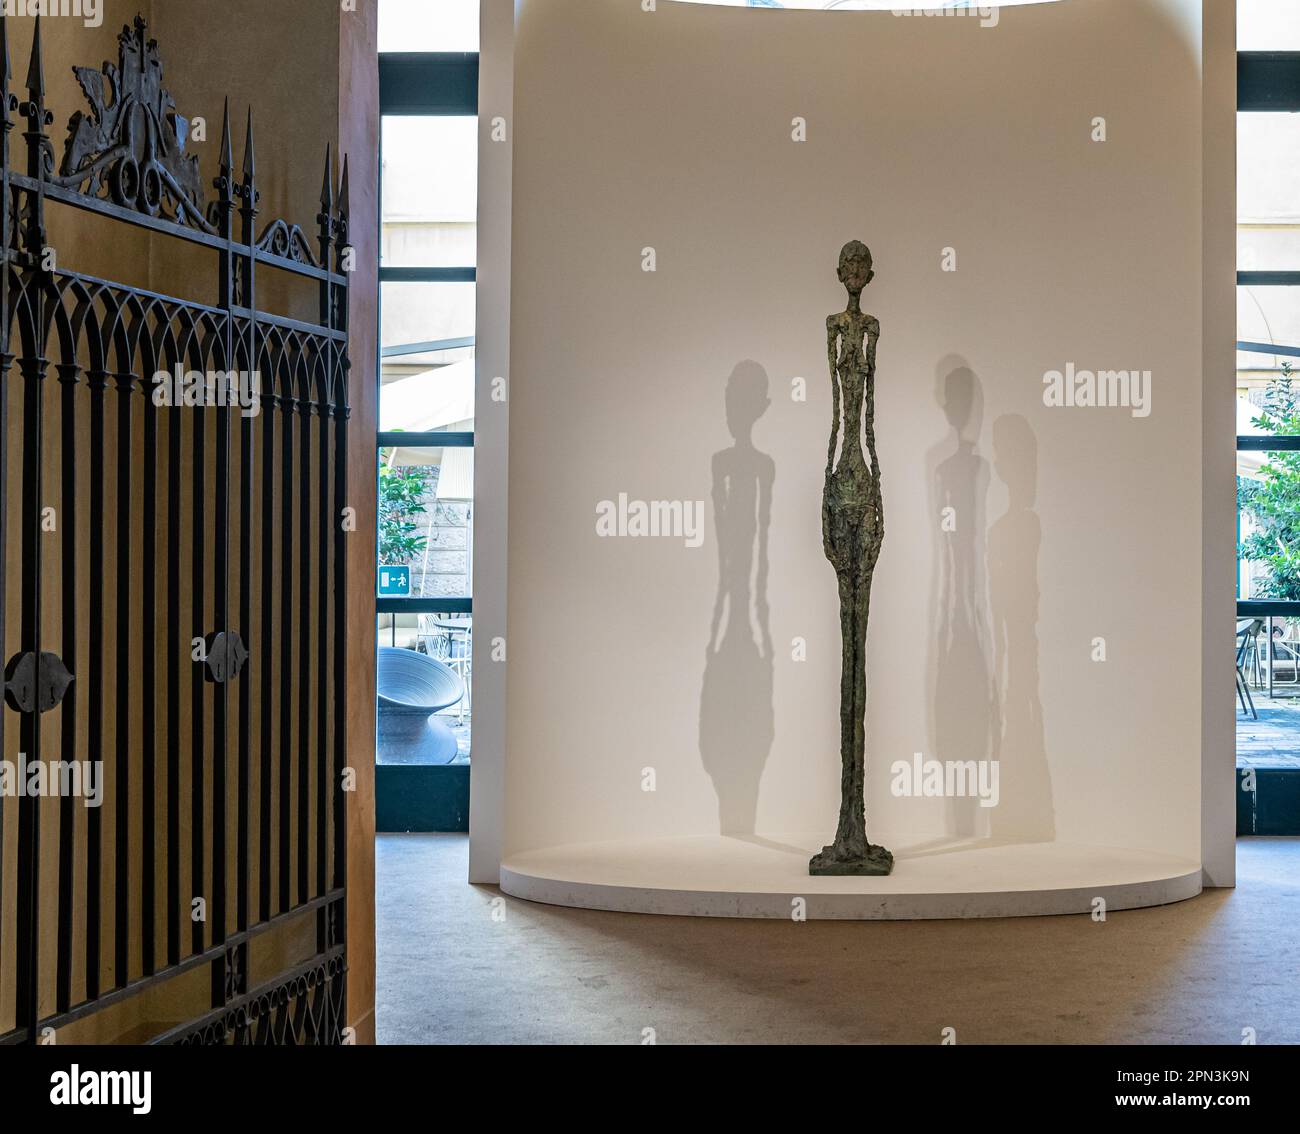 Magnani Palace, Reggio Emilia region, italy - exhibition 'the restless art' - Alberto Giacometti (1901-1966) -  sculpture ' Femme debout' Stock Photo